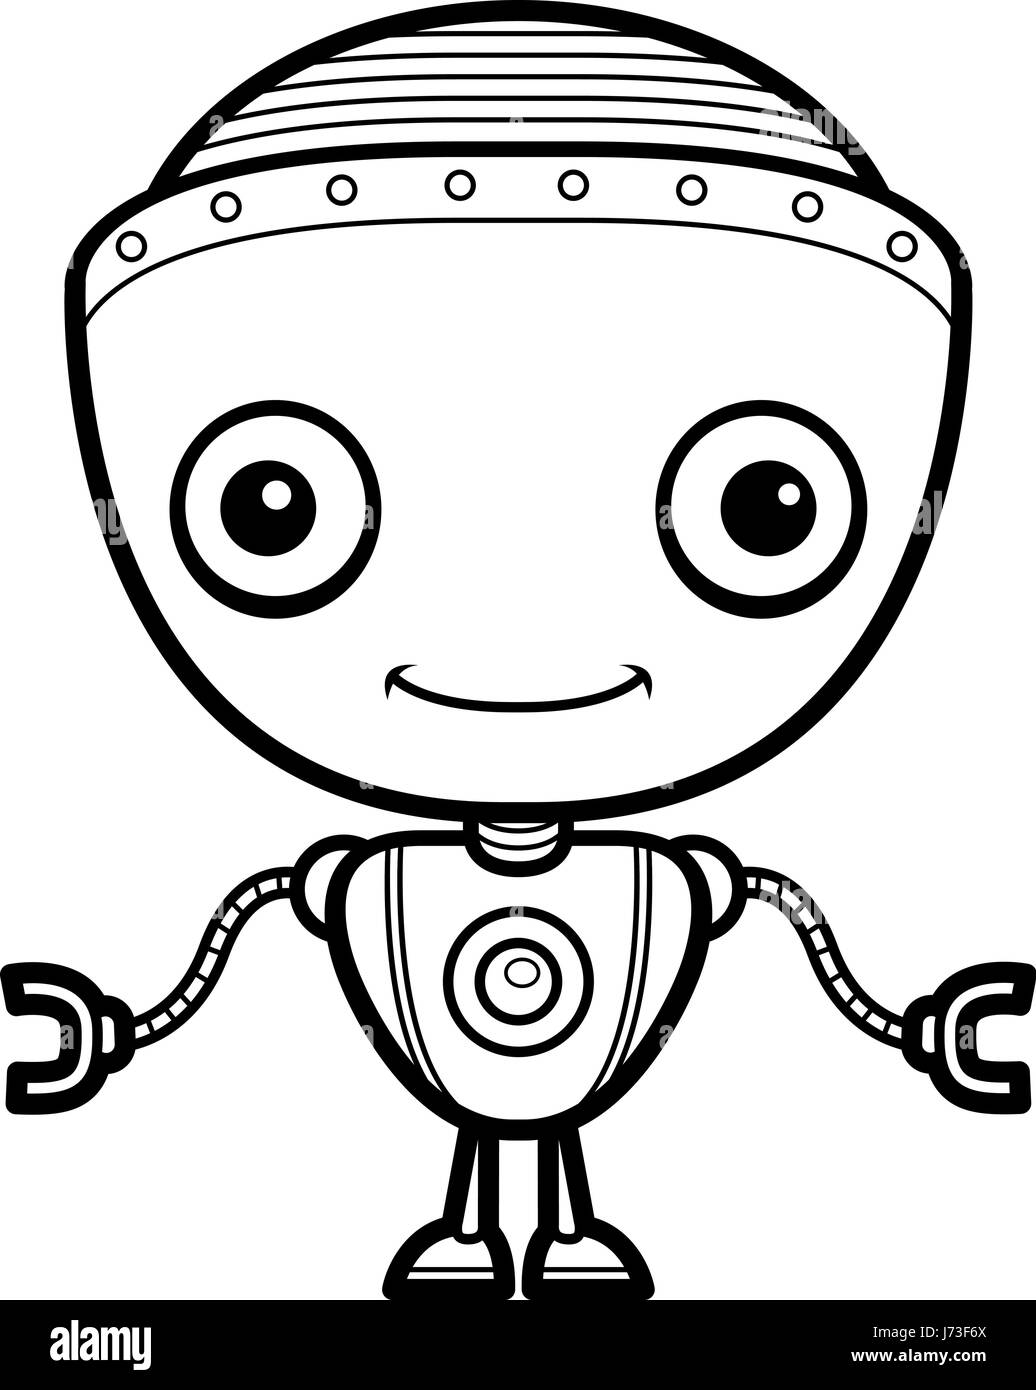 Robot boy cartoon Black and White Stock Photos & Images - Alamy